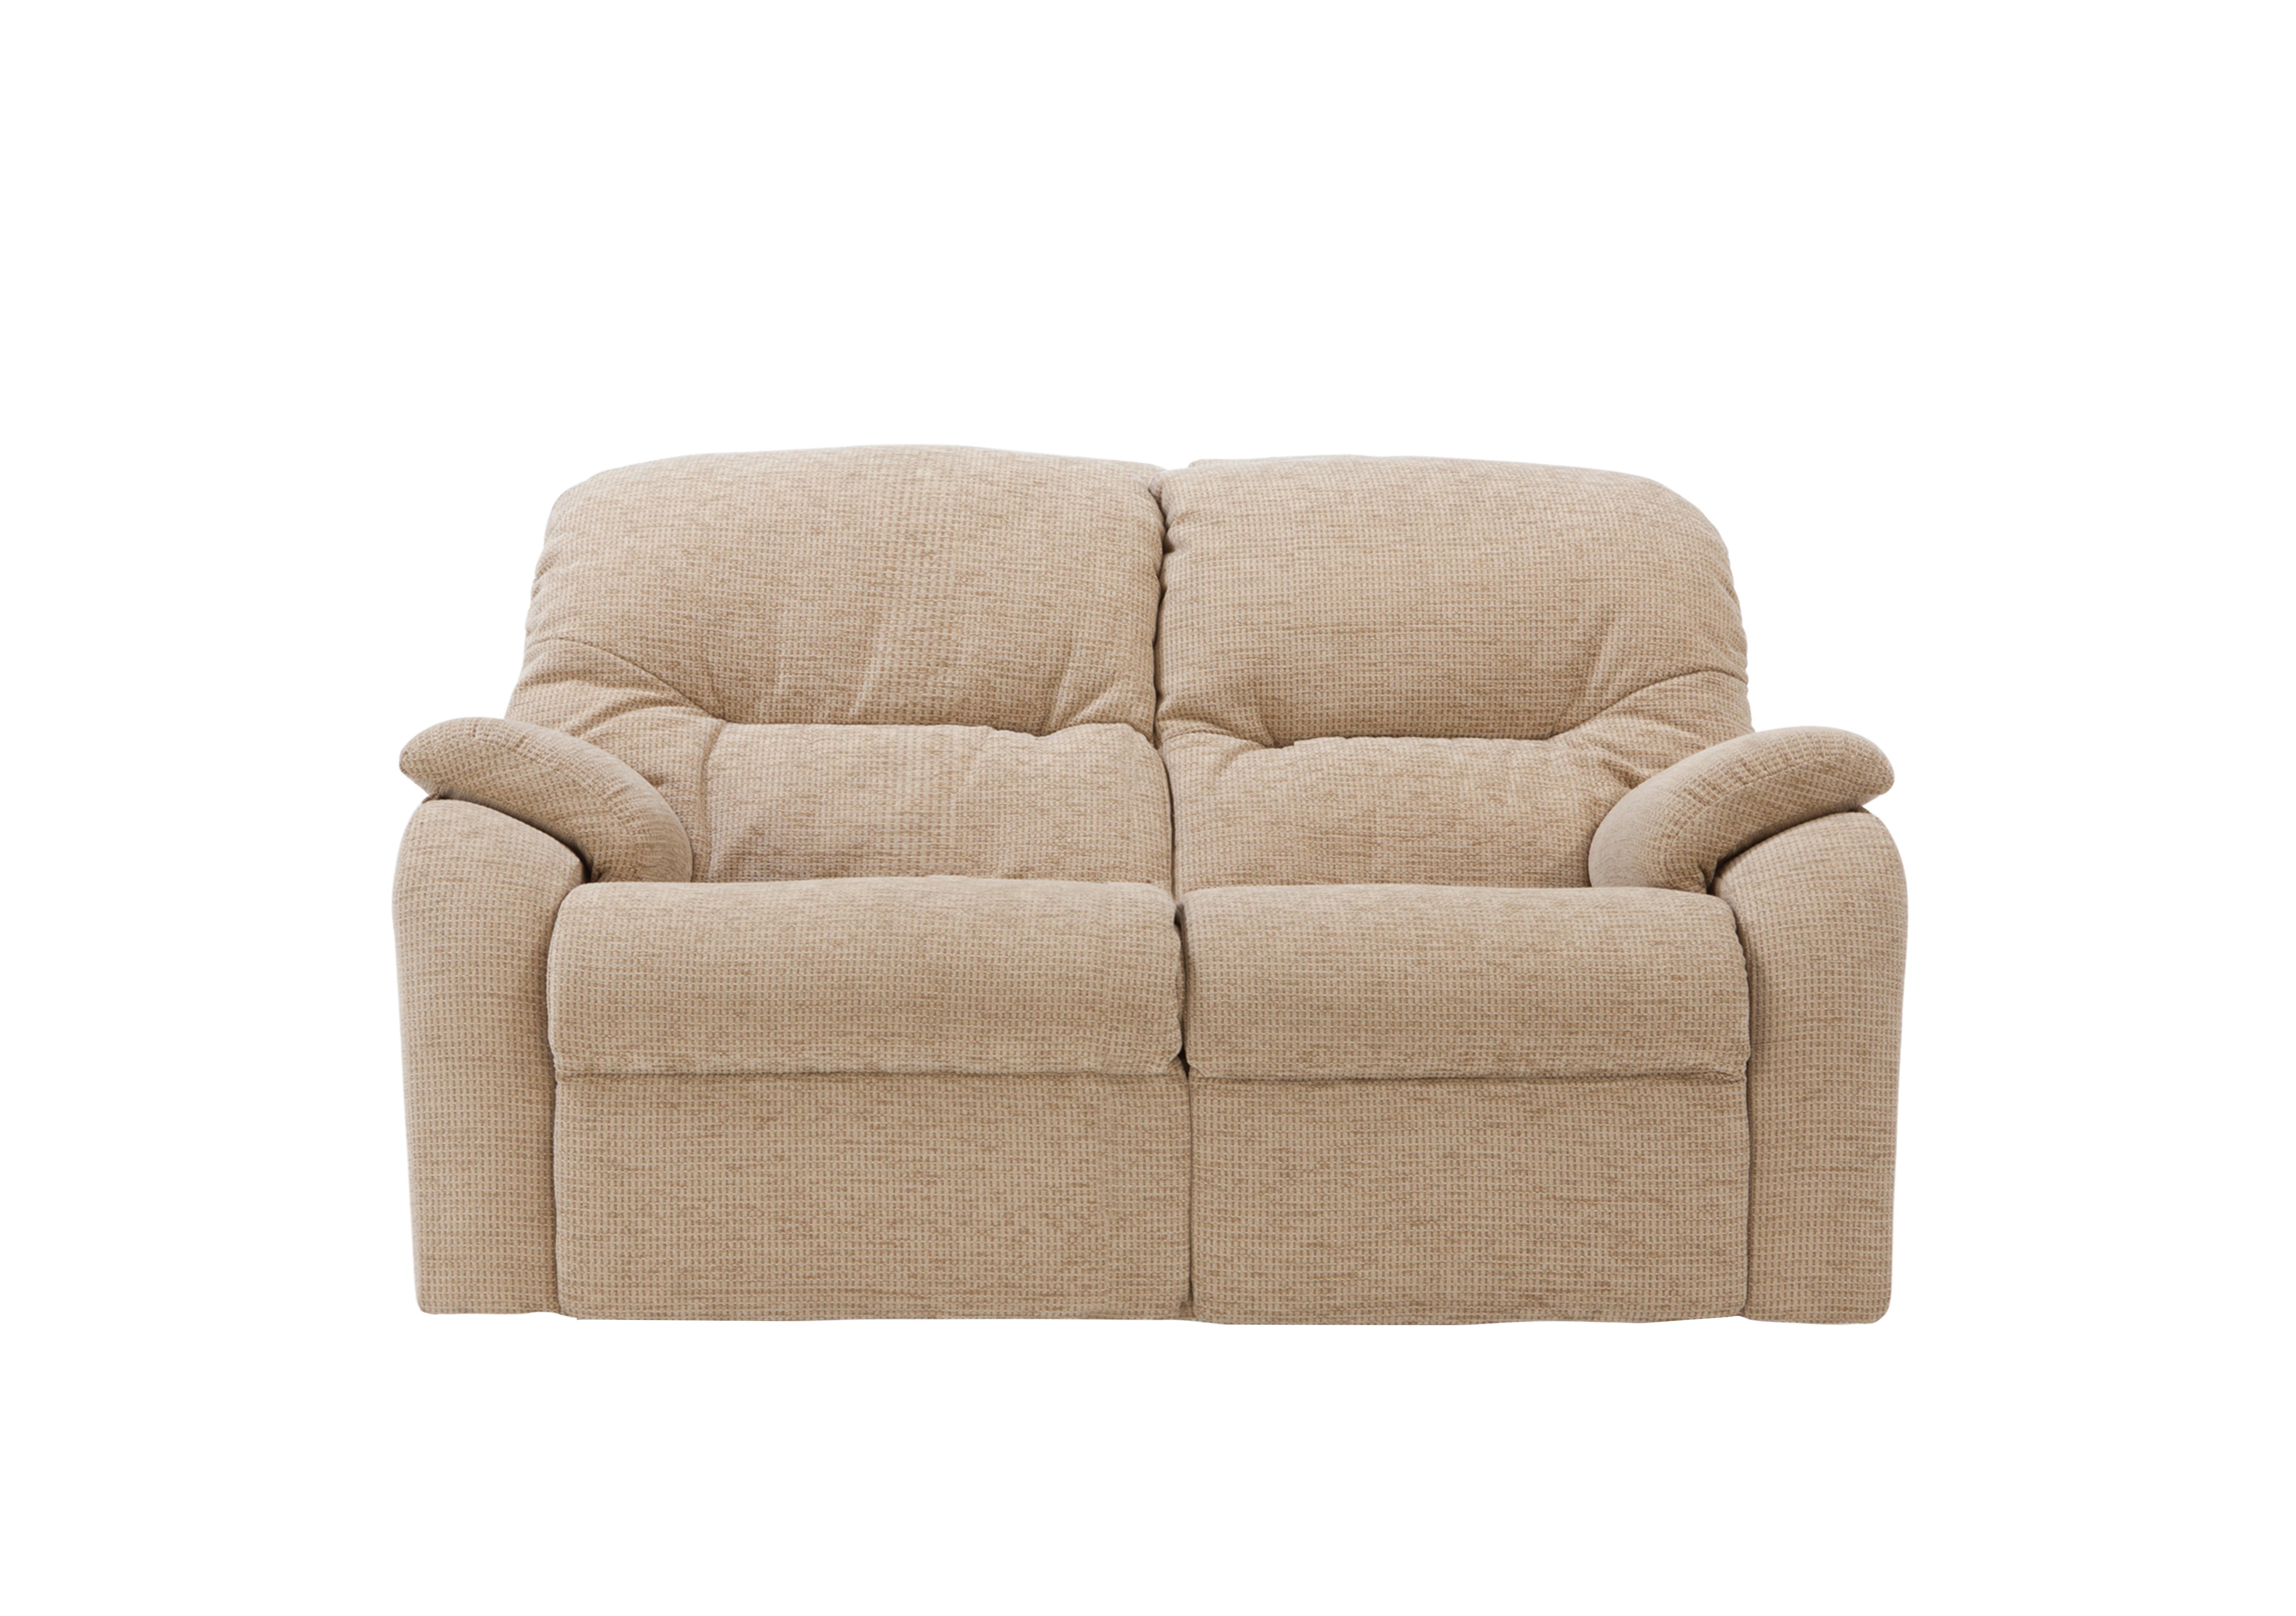 Mistral 2 Seater Fabric Recliner Sofa G Plan Furniture Village